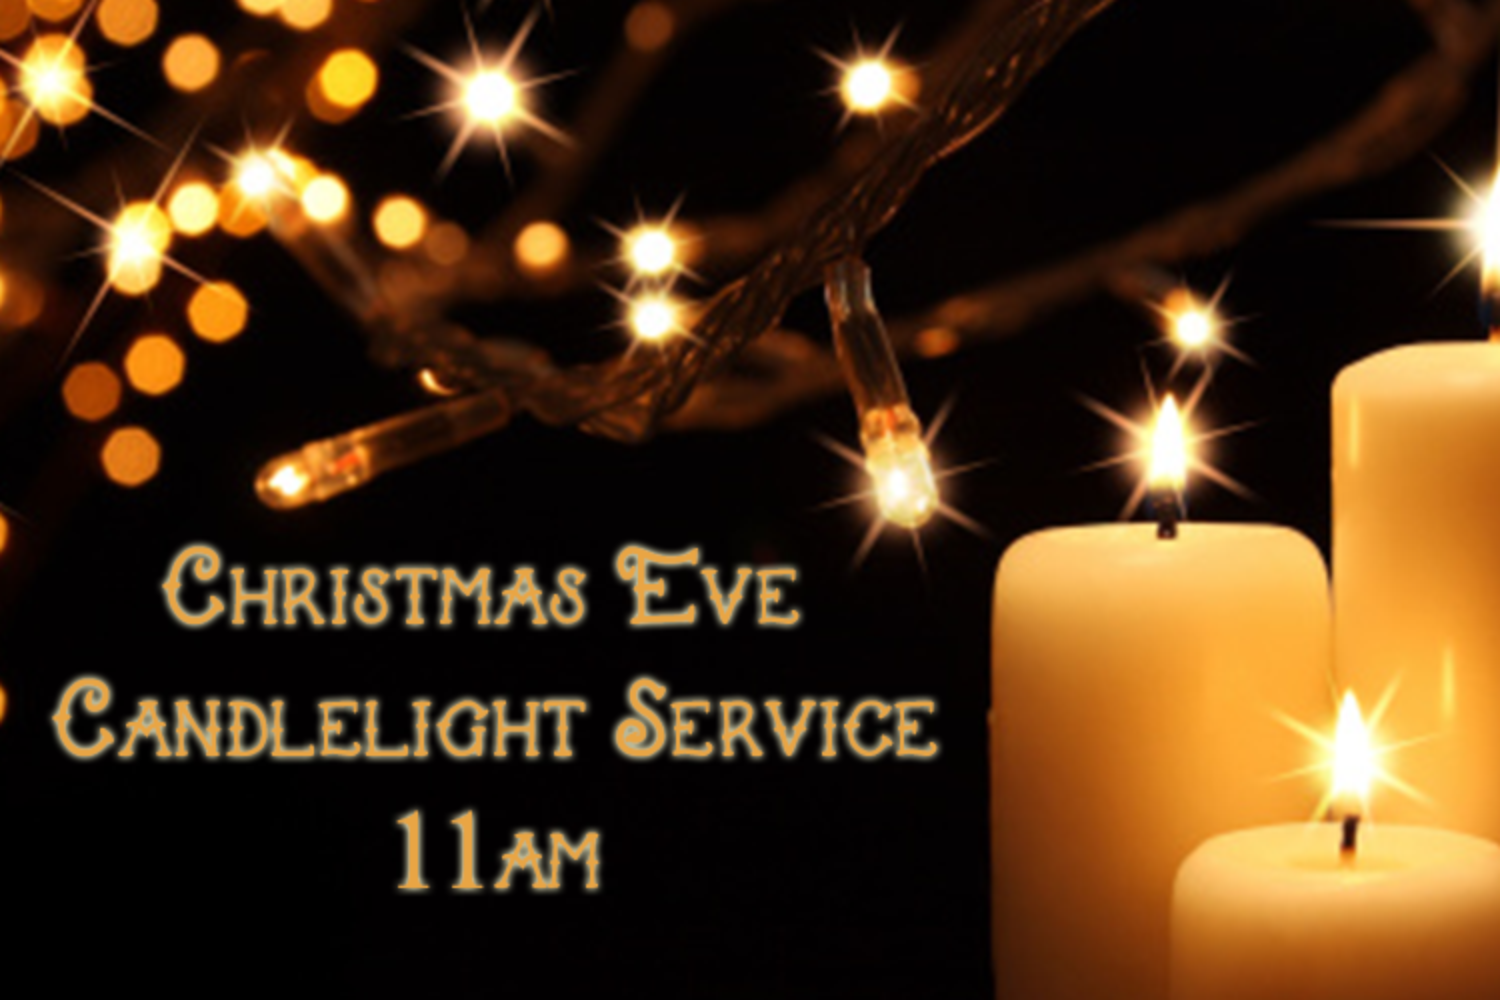 Christmas Eve Candlelight Service Evangel Christian Center